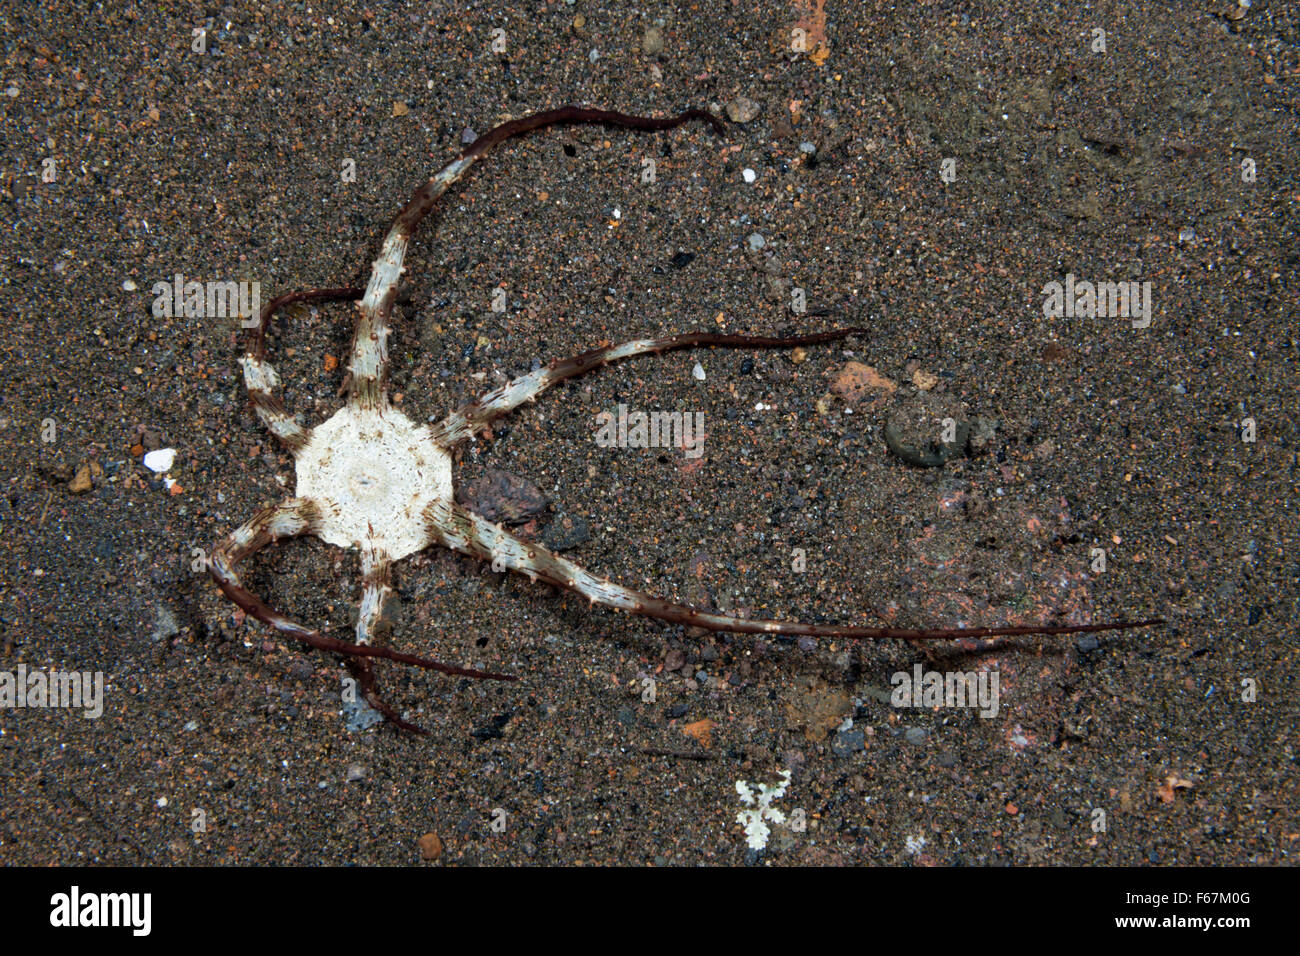 Branching Tube Anemone, Actinostephanus haeckeli, Komodo National Park, Indonesia Stock Photo